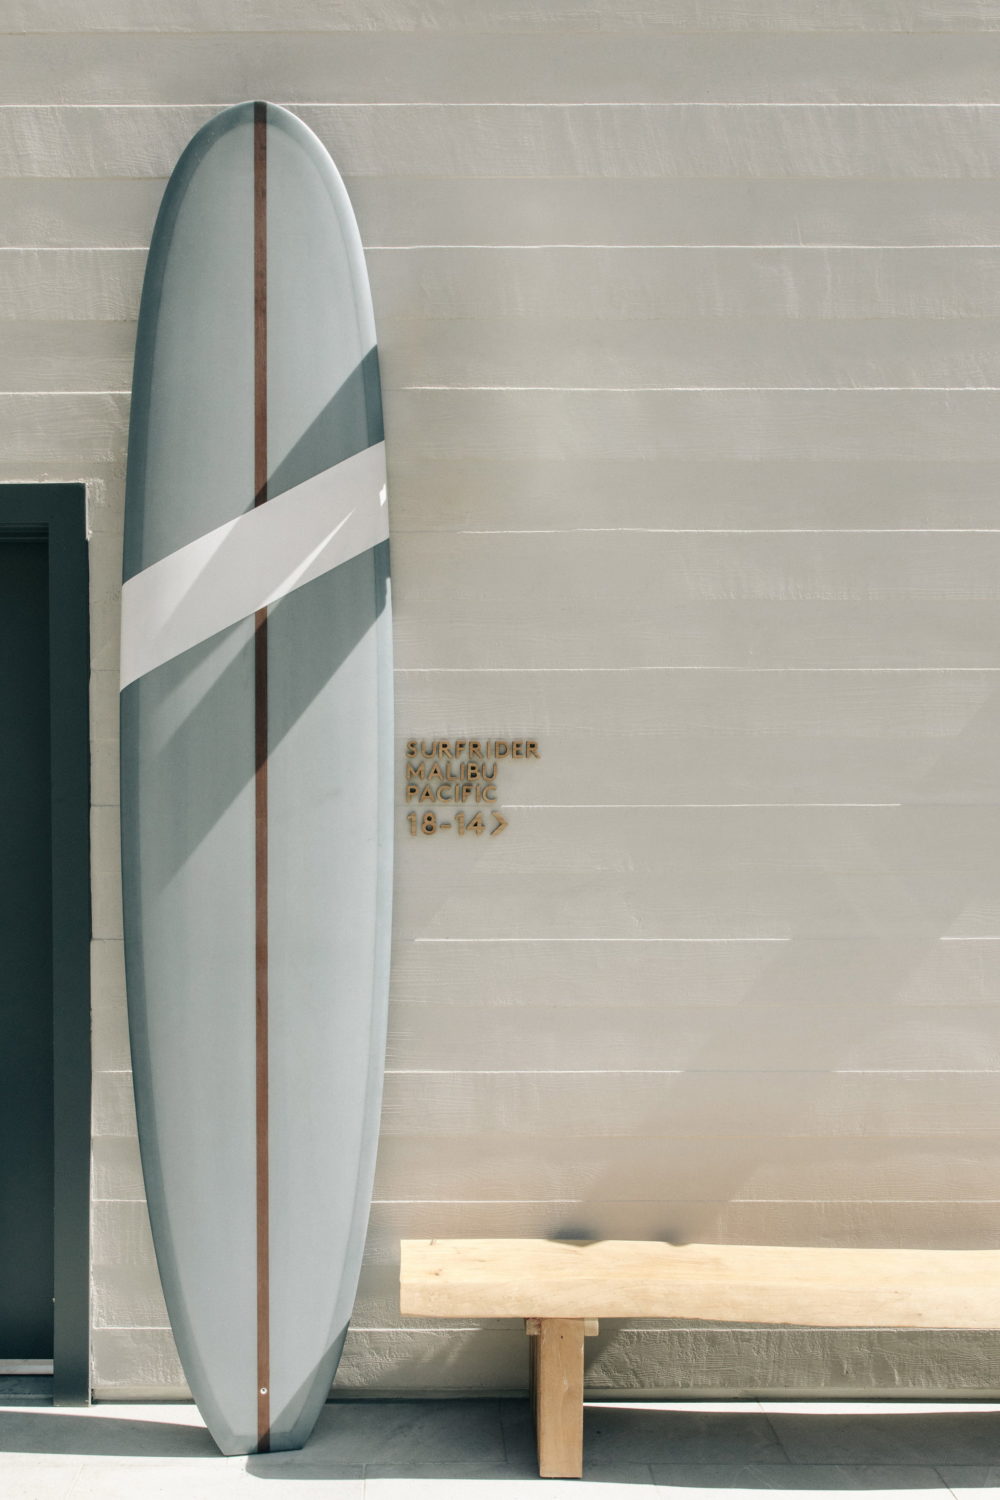 The Surfrider Hotel Malibu by Matthew Goodwin